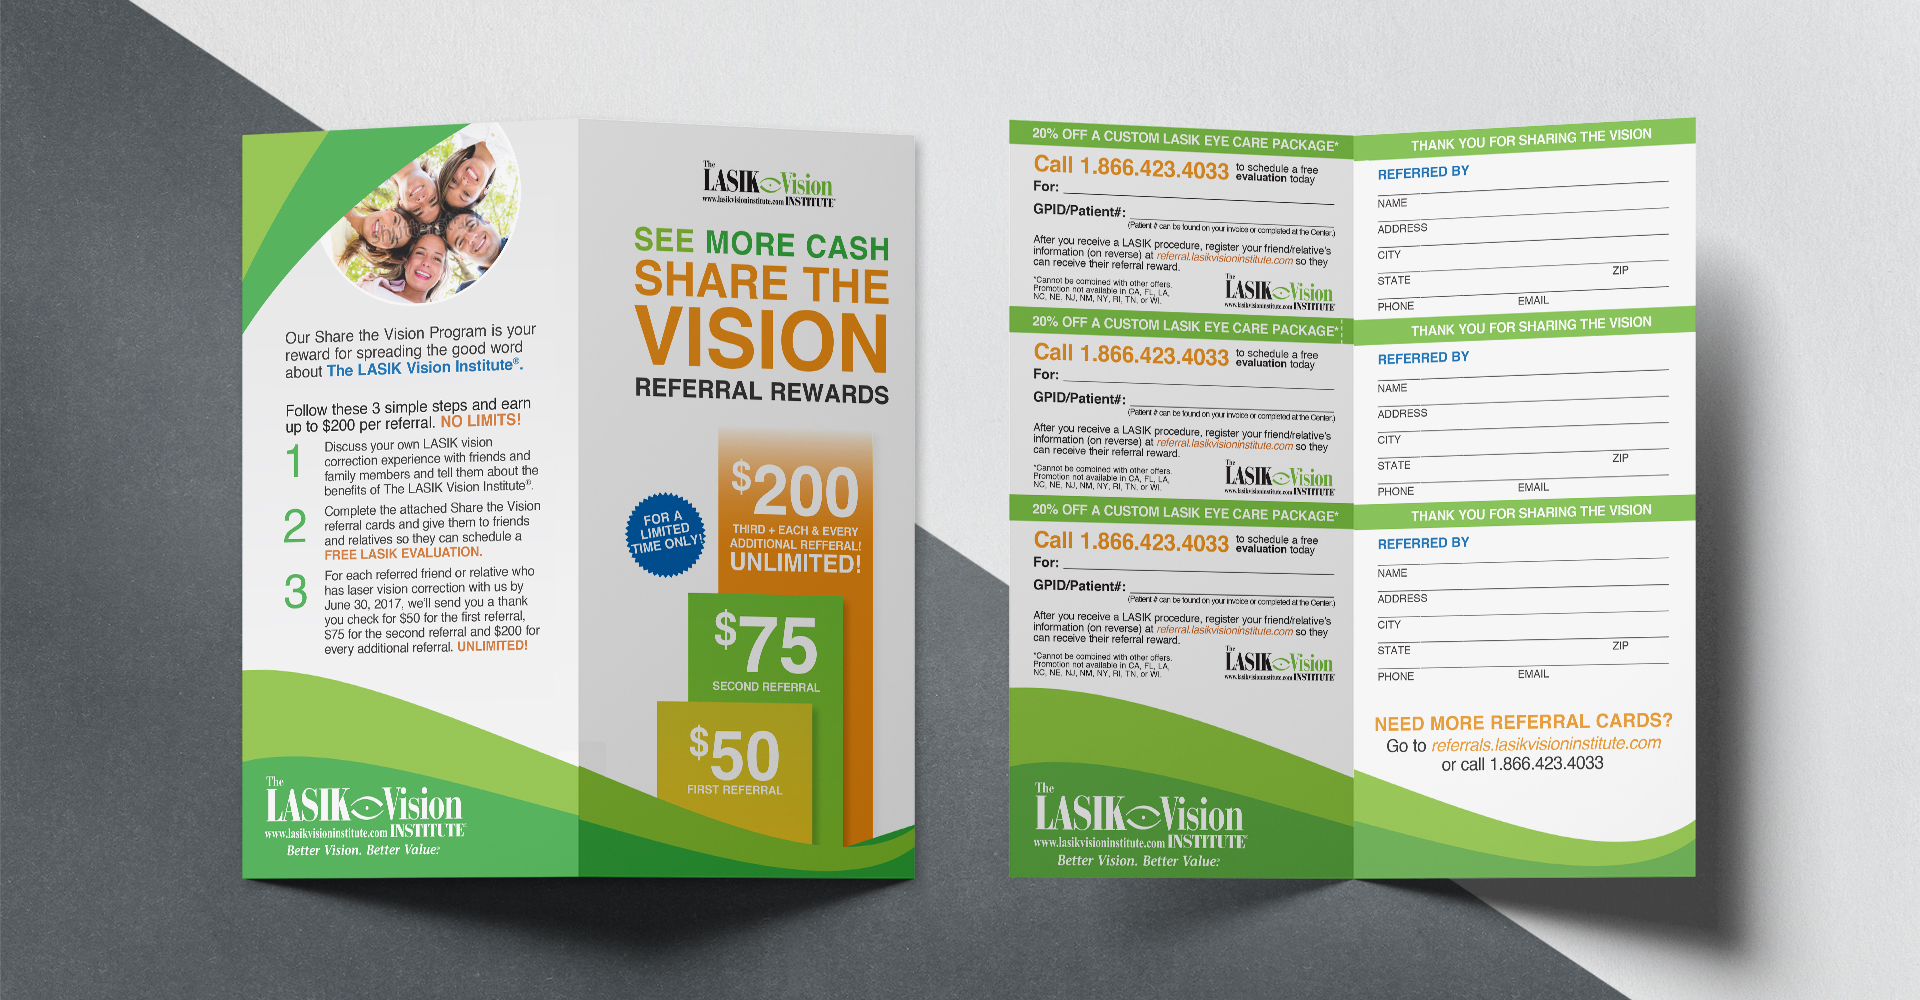 The Lasik Vision Institute brochure